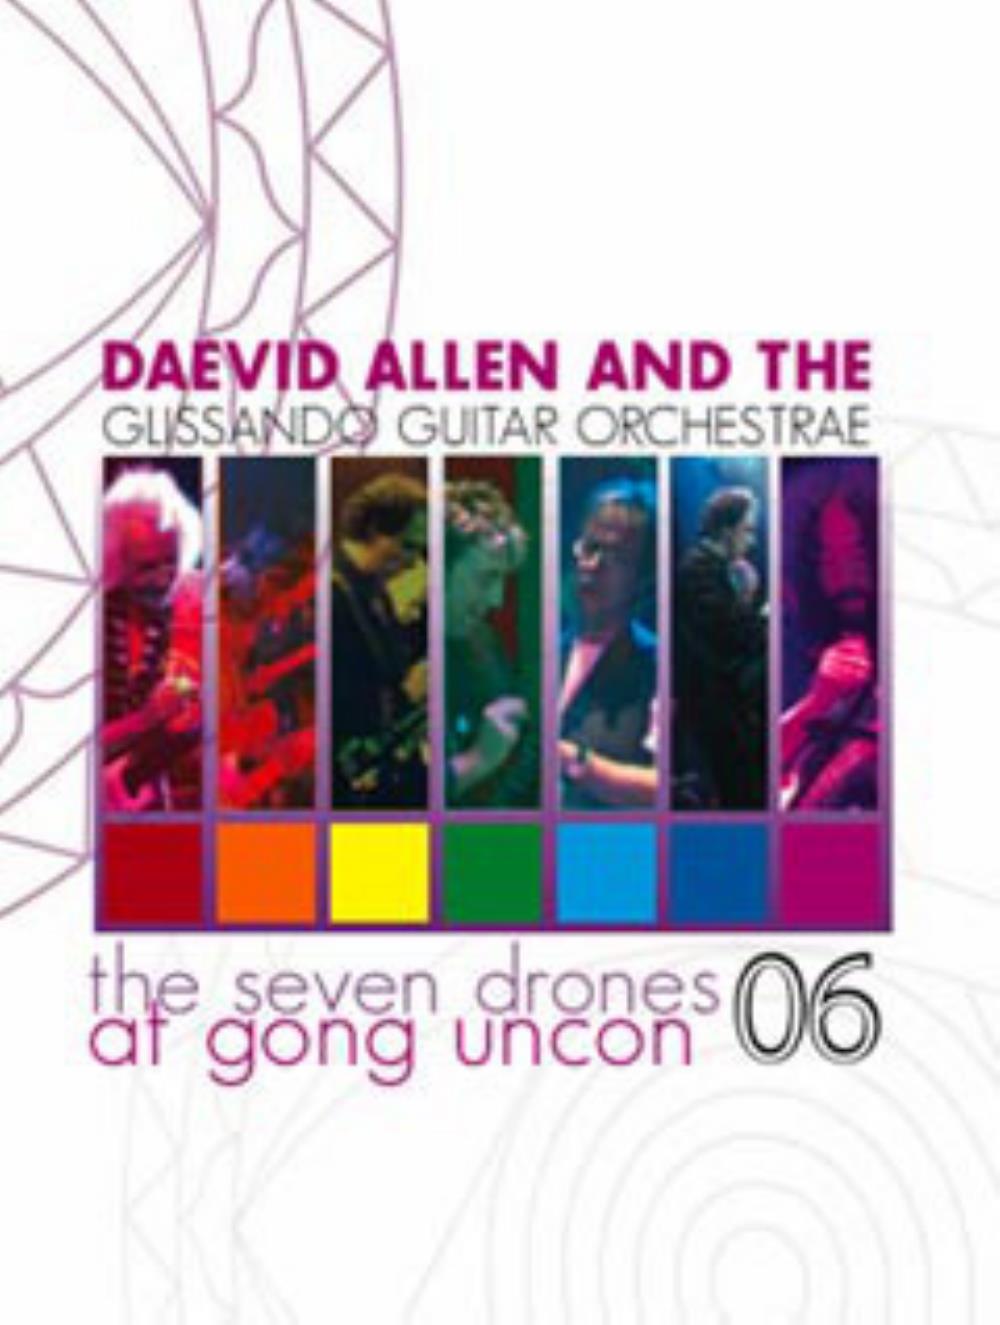 Daevid Allen - Daevid Allen & The Glissando Guitar Orchestrae: The Seven Drones (at Gong Uncon 06) CD (album) cover